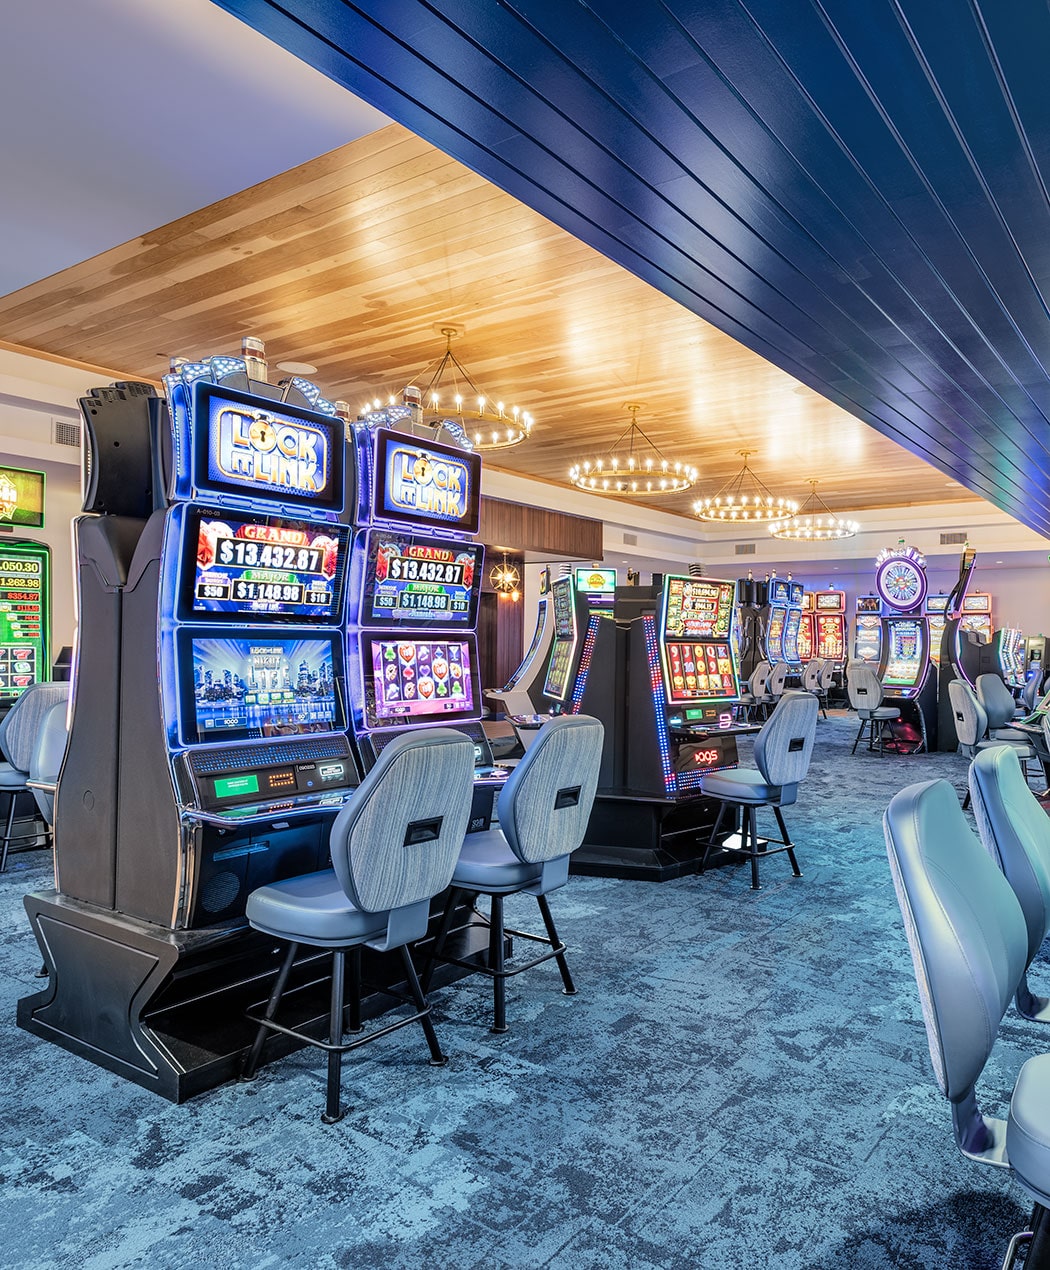 slot machines at lake house casino in sylvan beach